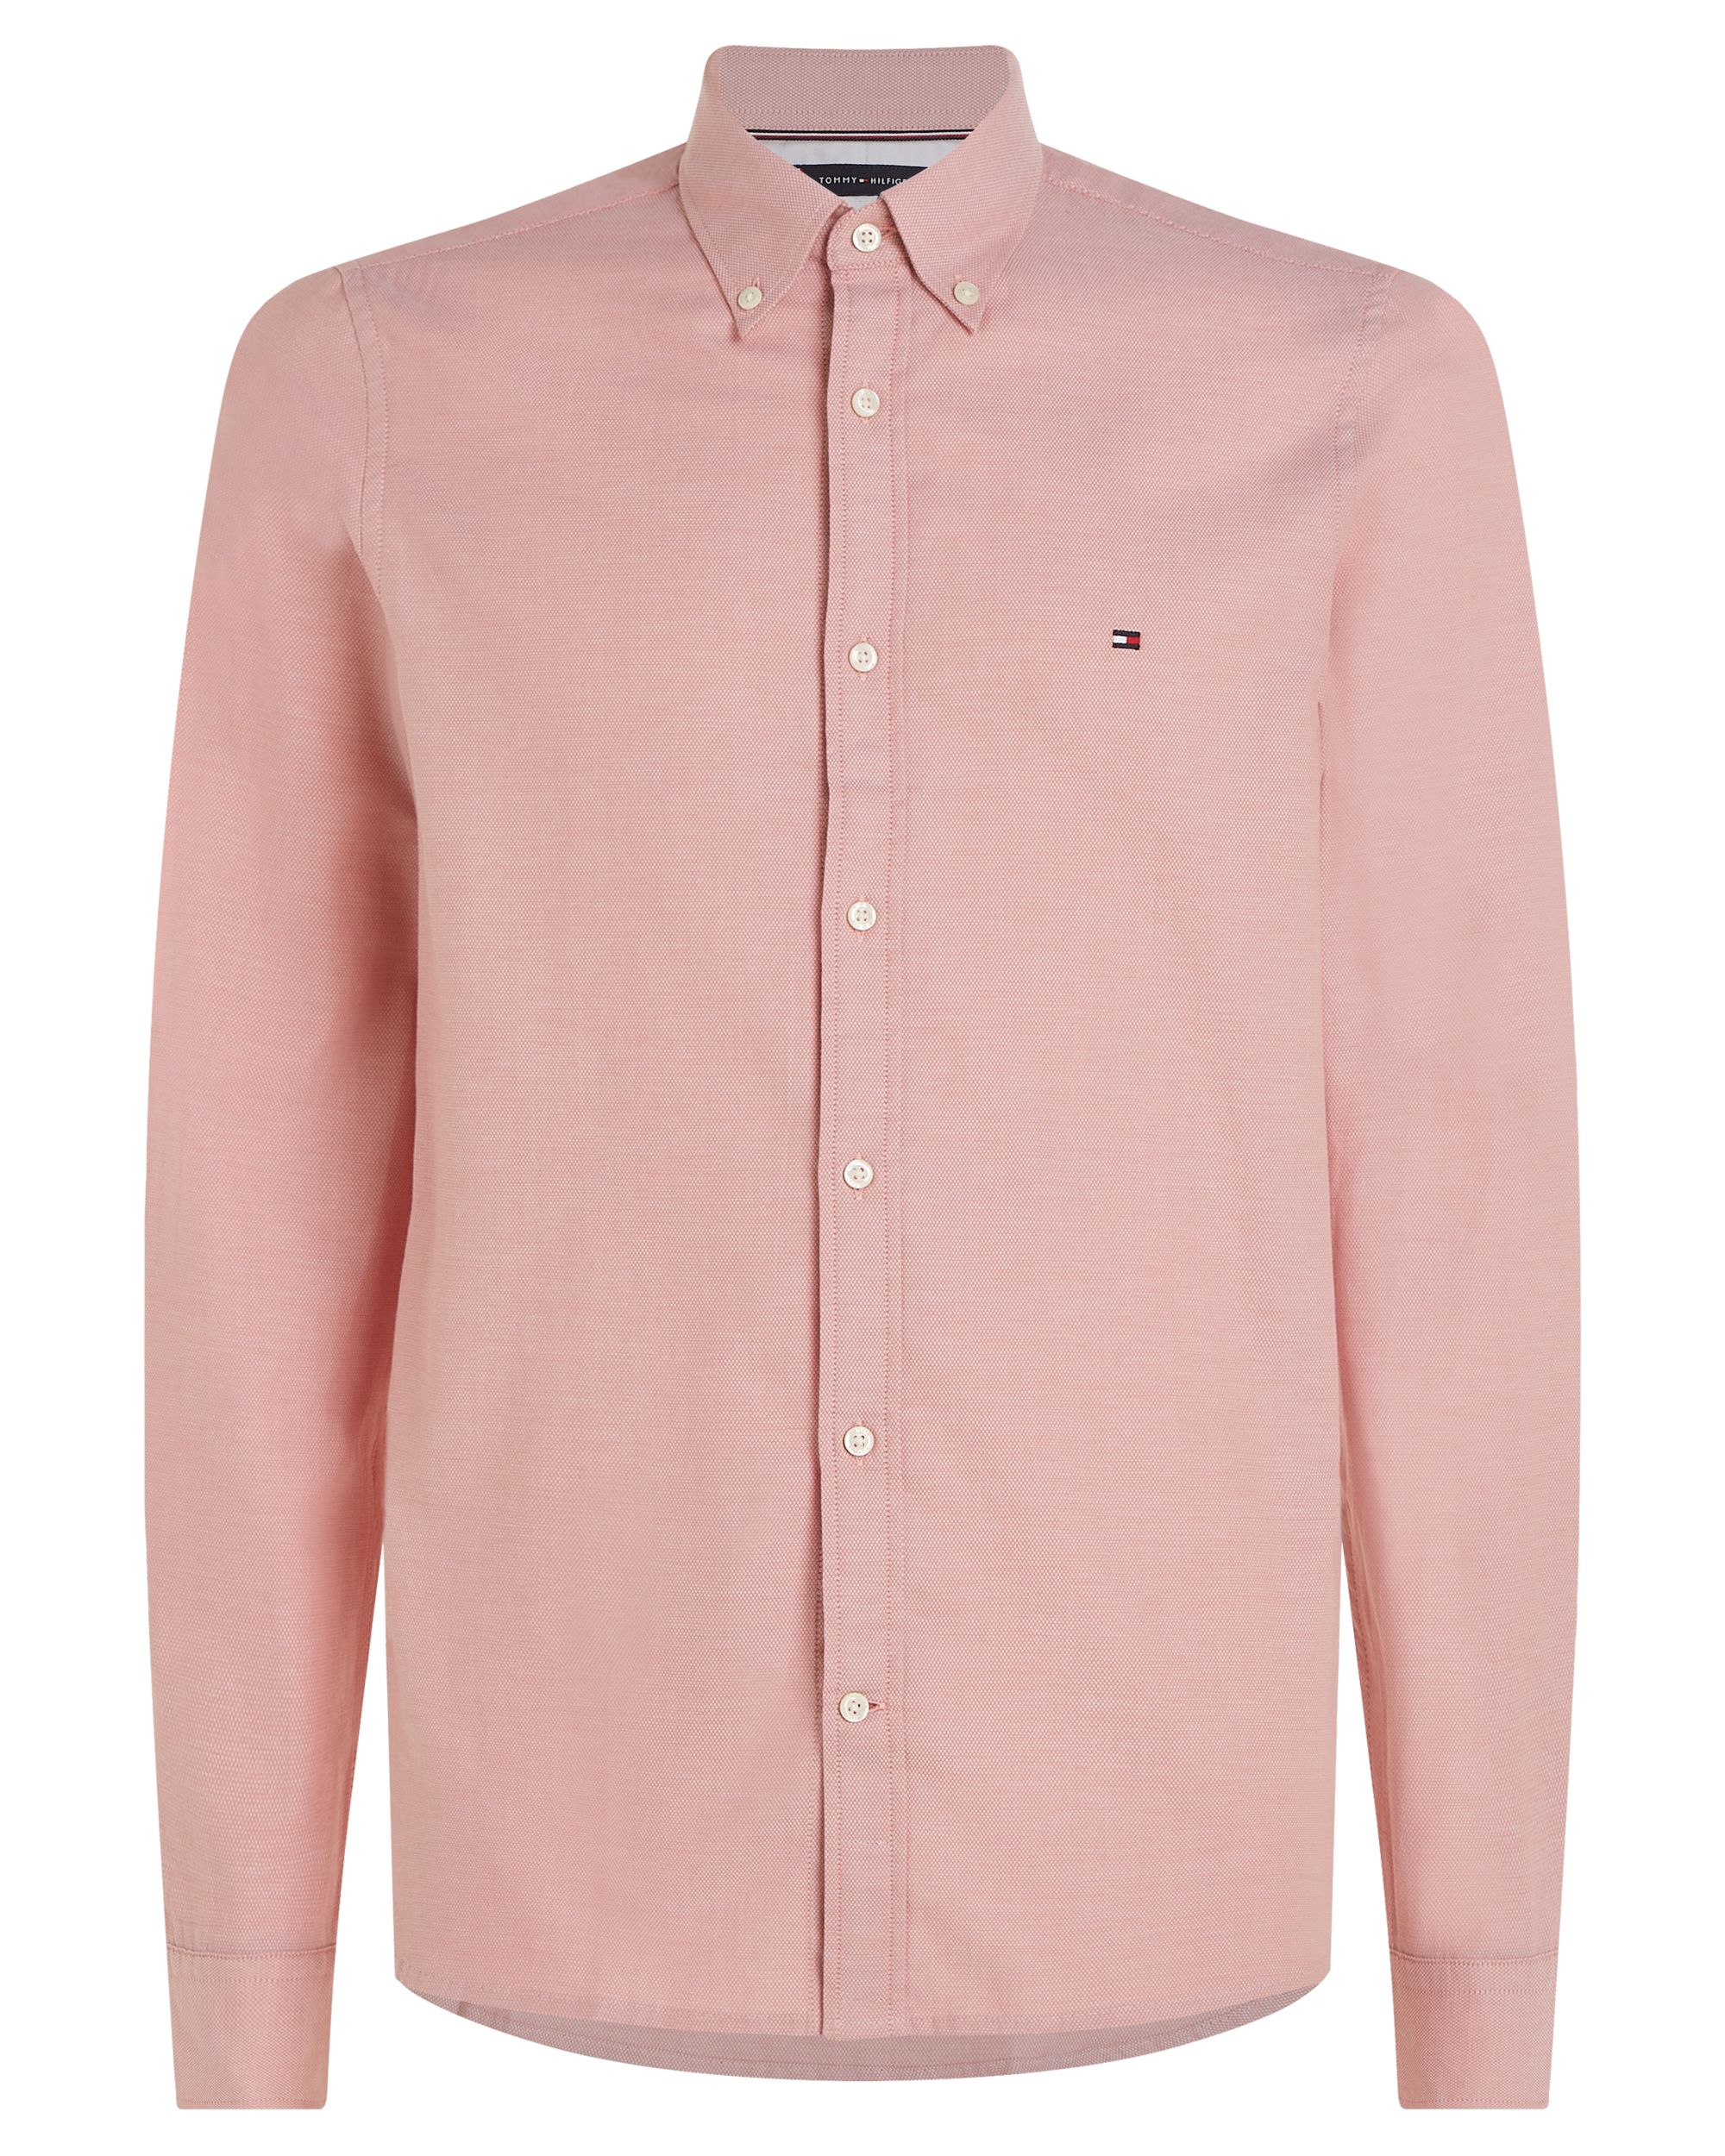 Tommy Hilfiger Menswear Casual Overhemd LM Roze 094626-001-L